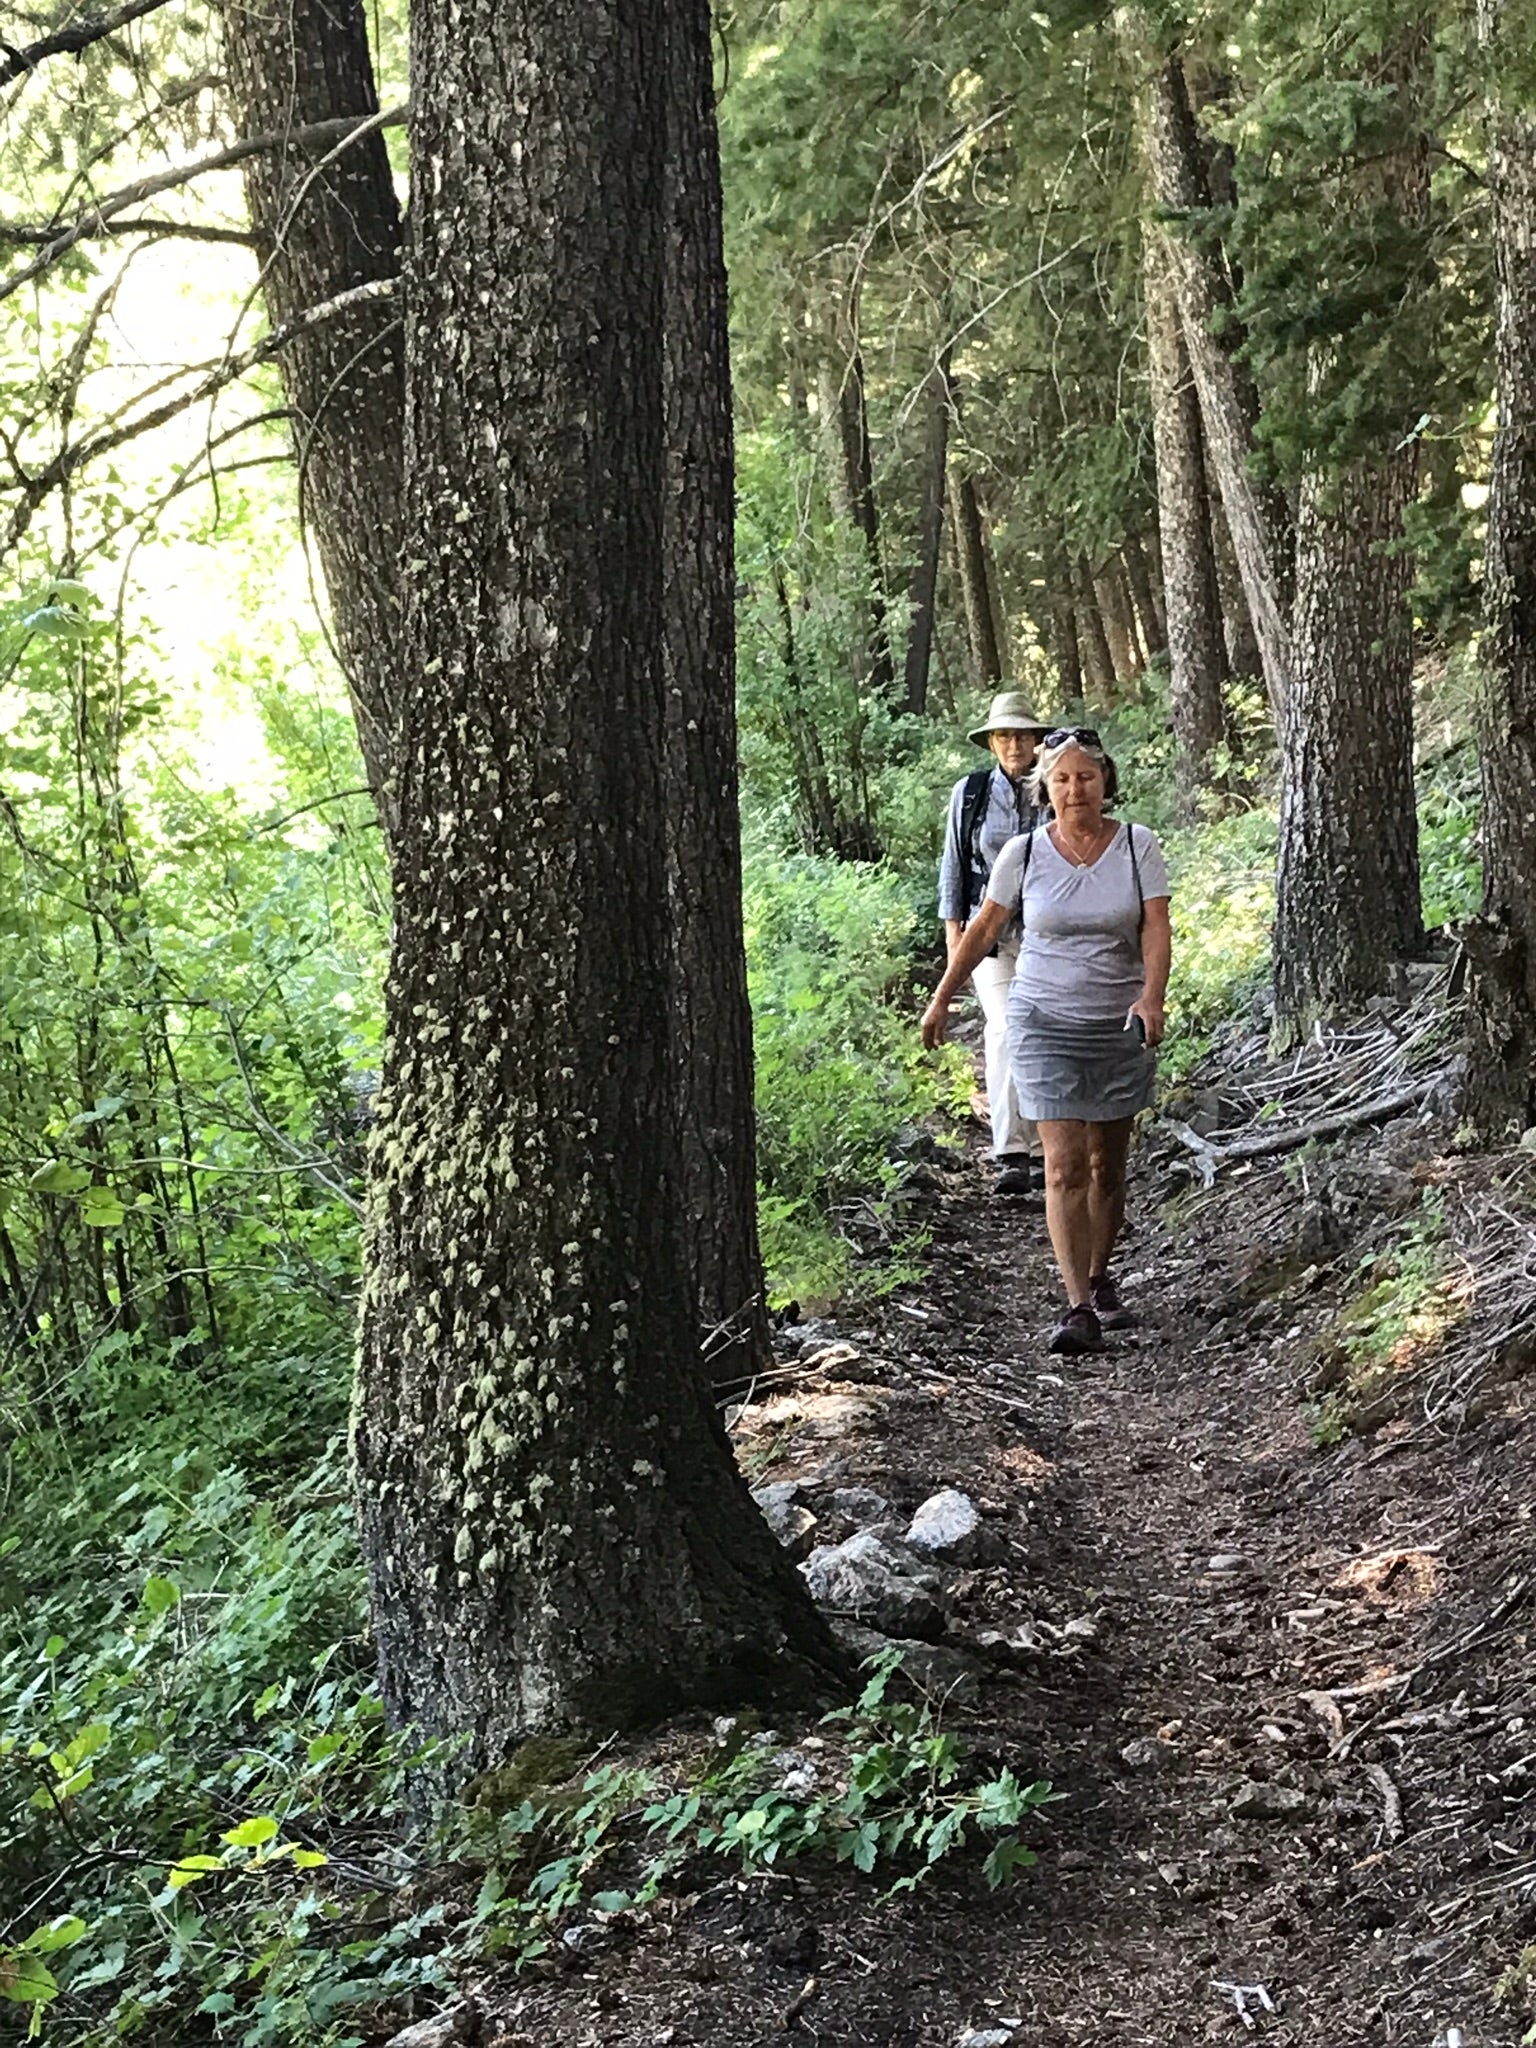 Hiking on the Boulder Creek trail.